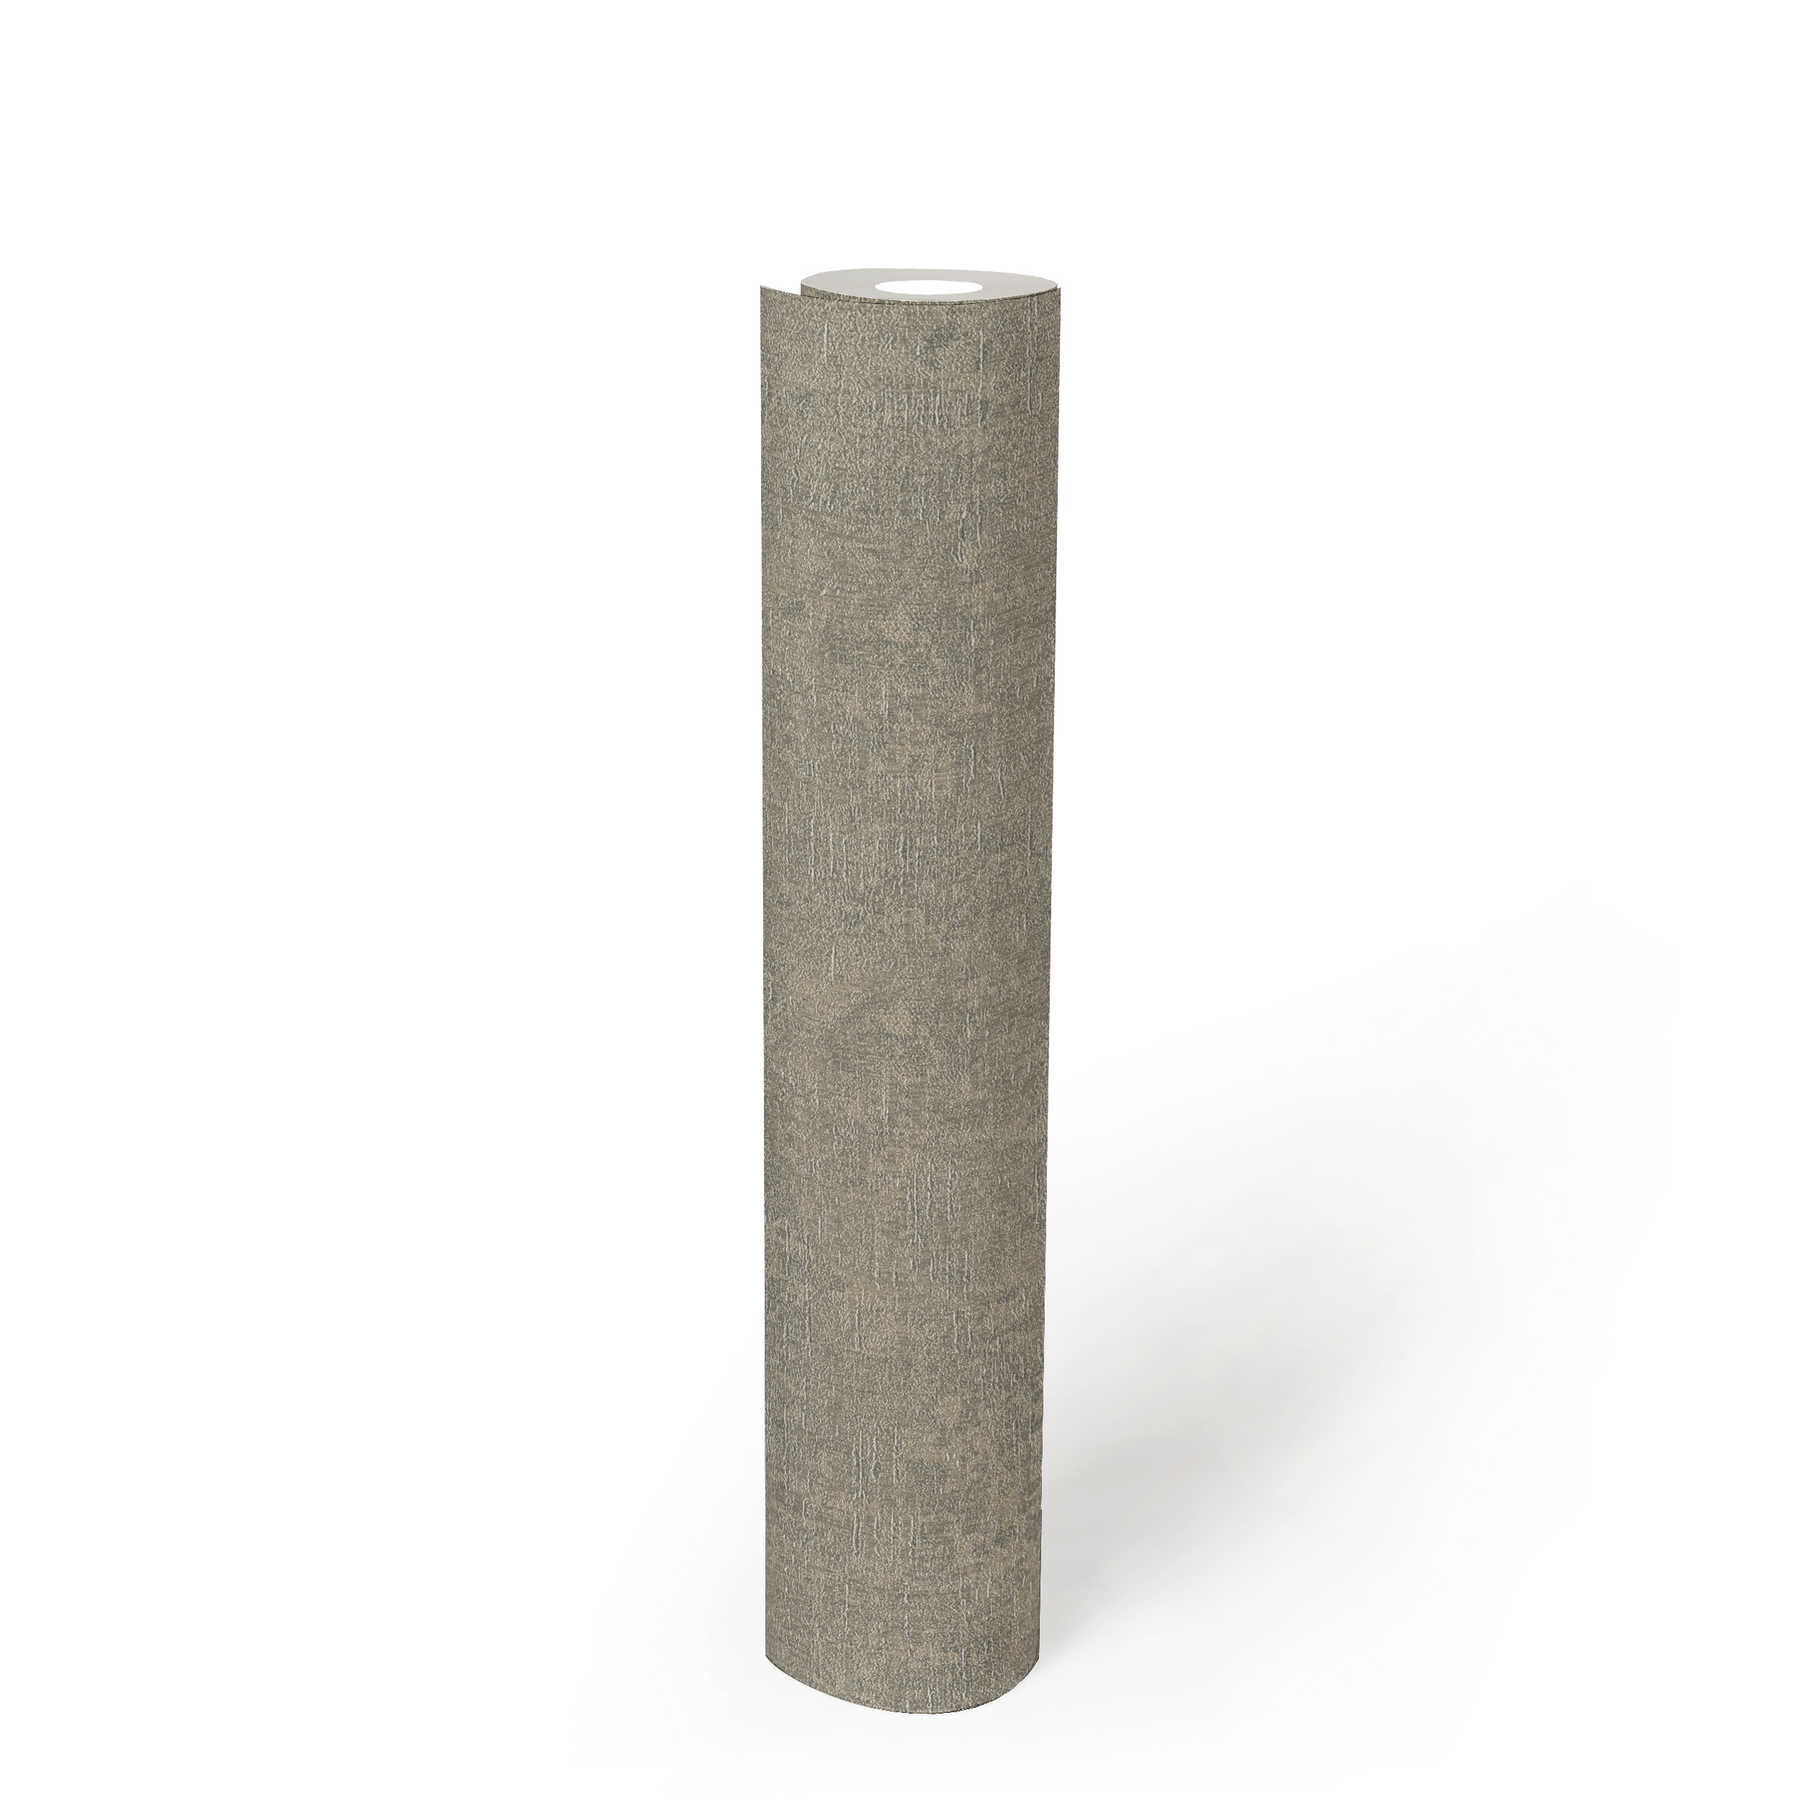             Silver grey plain wallpaper with concrete plaster look - beige, grey
        